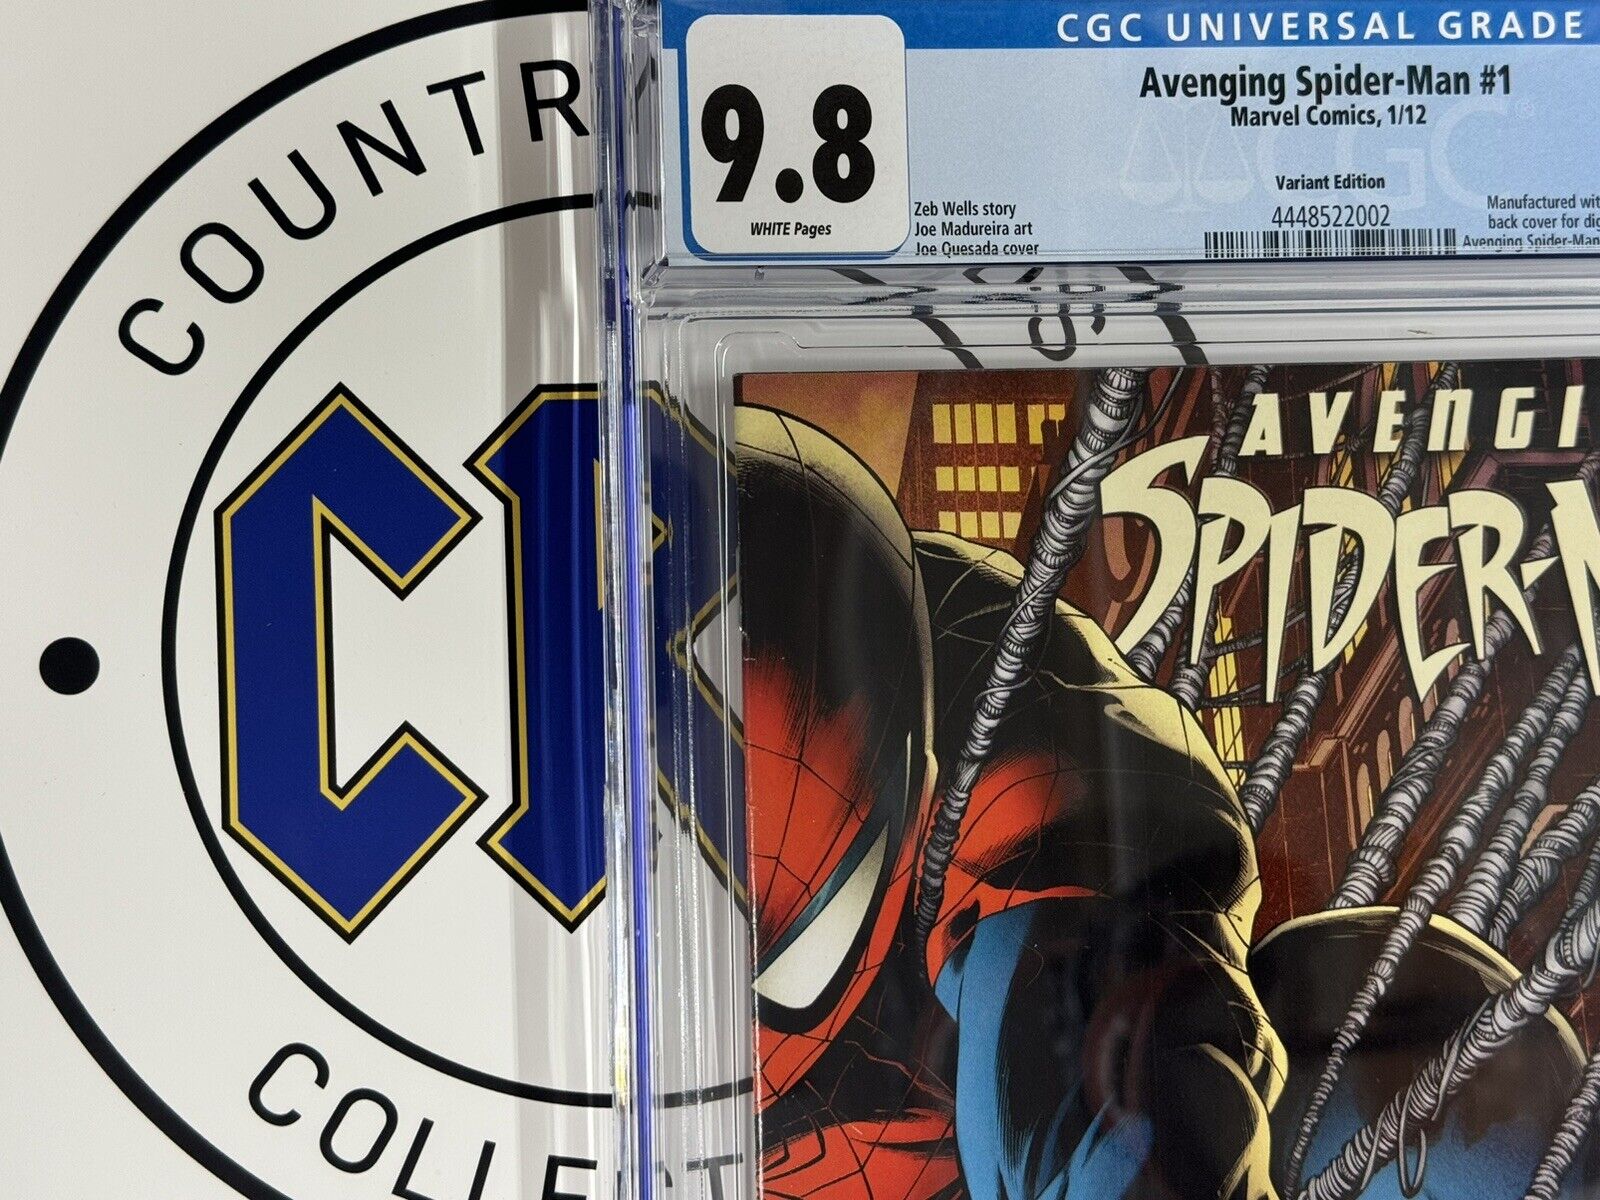 Marvel Comics (1/12) Avenging Spider-Man #1 Variant Edition CGC 9.8